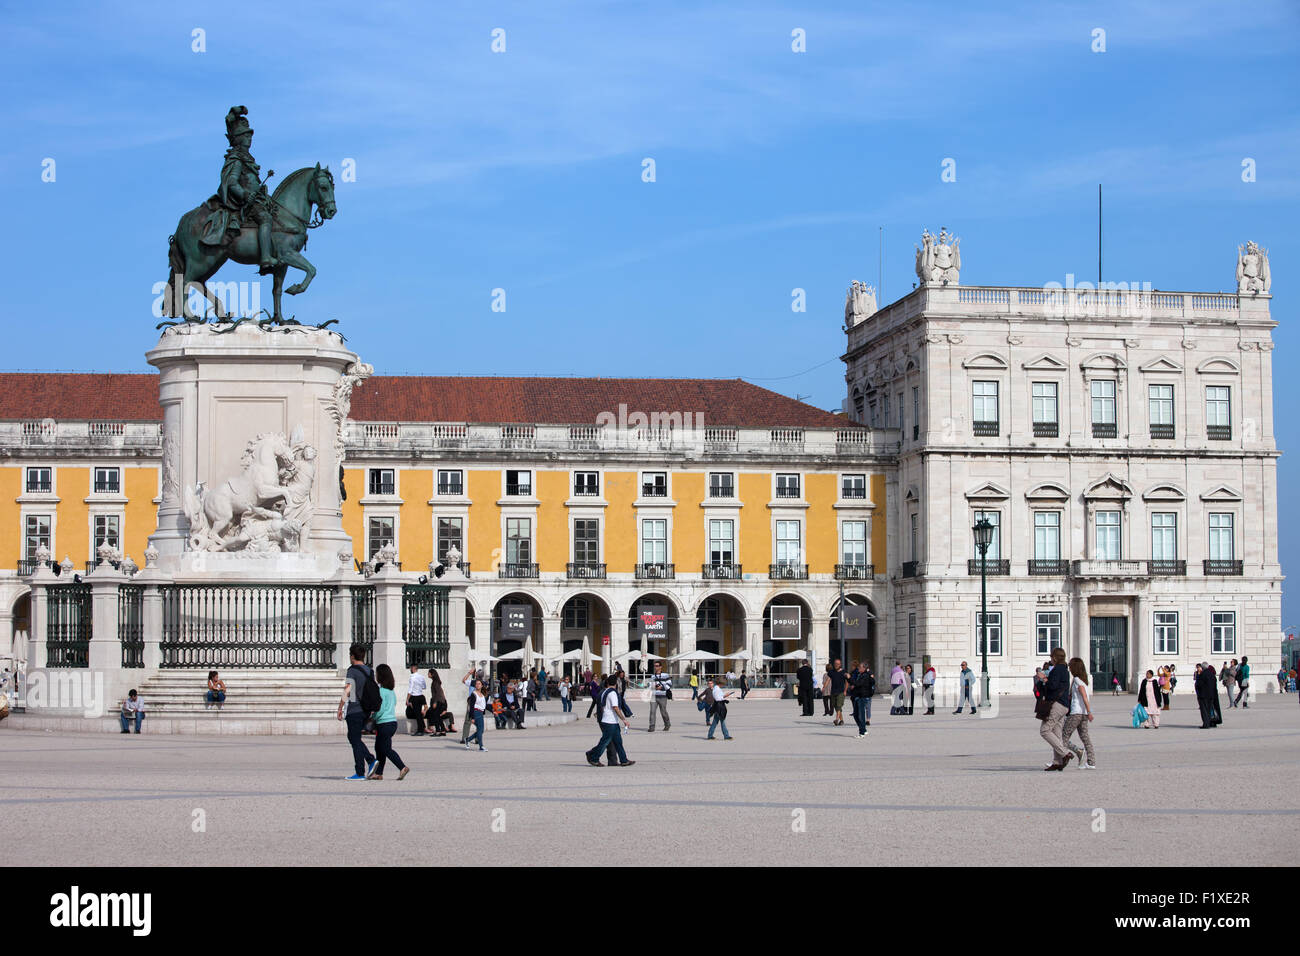 Portugal, Lisbon, Praca do Comercio - Commerce Square, equestrian statue of King Jose I from 1775. Stock Photo